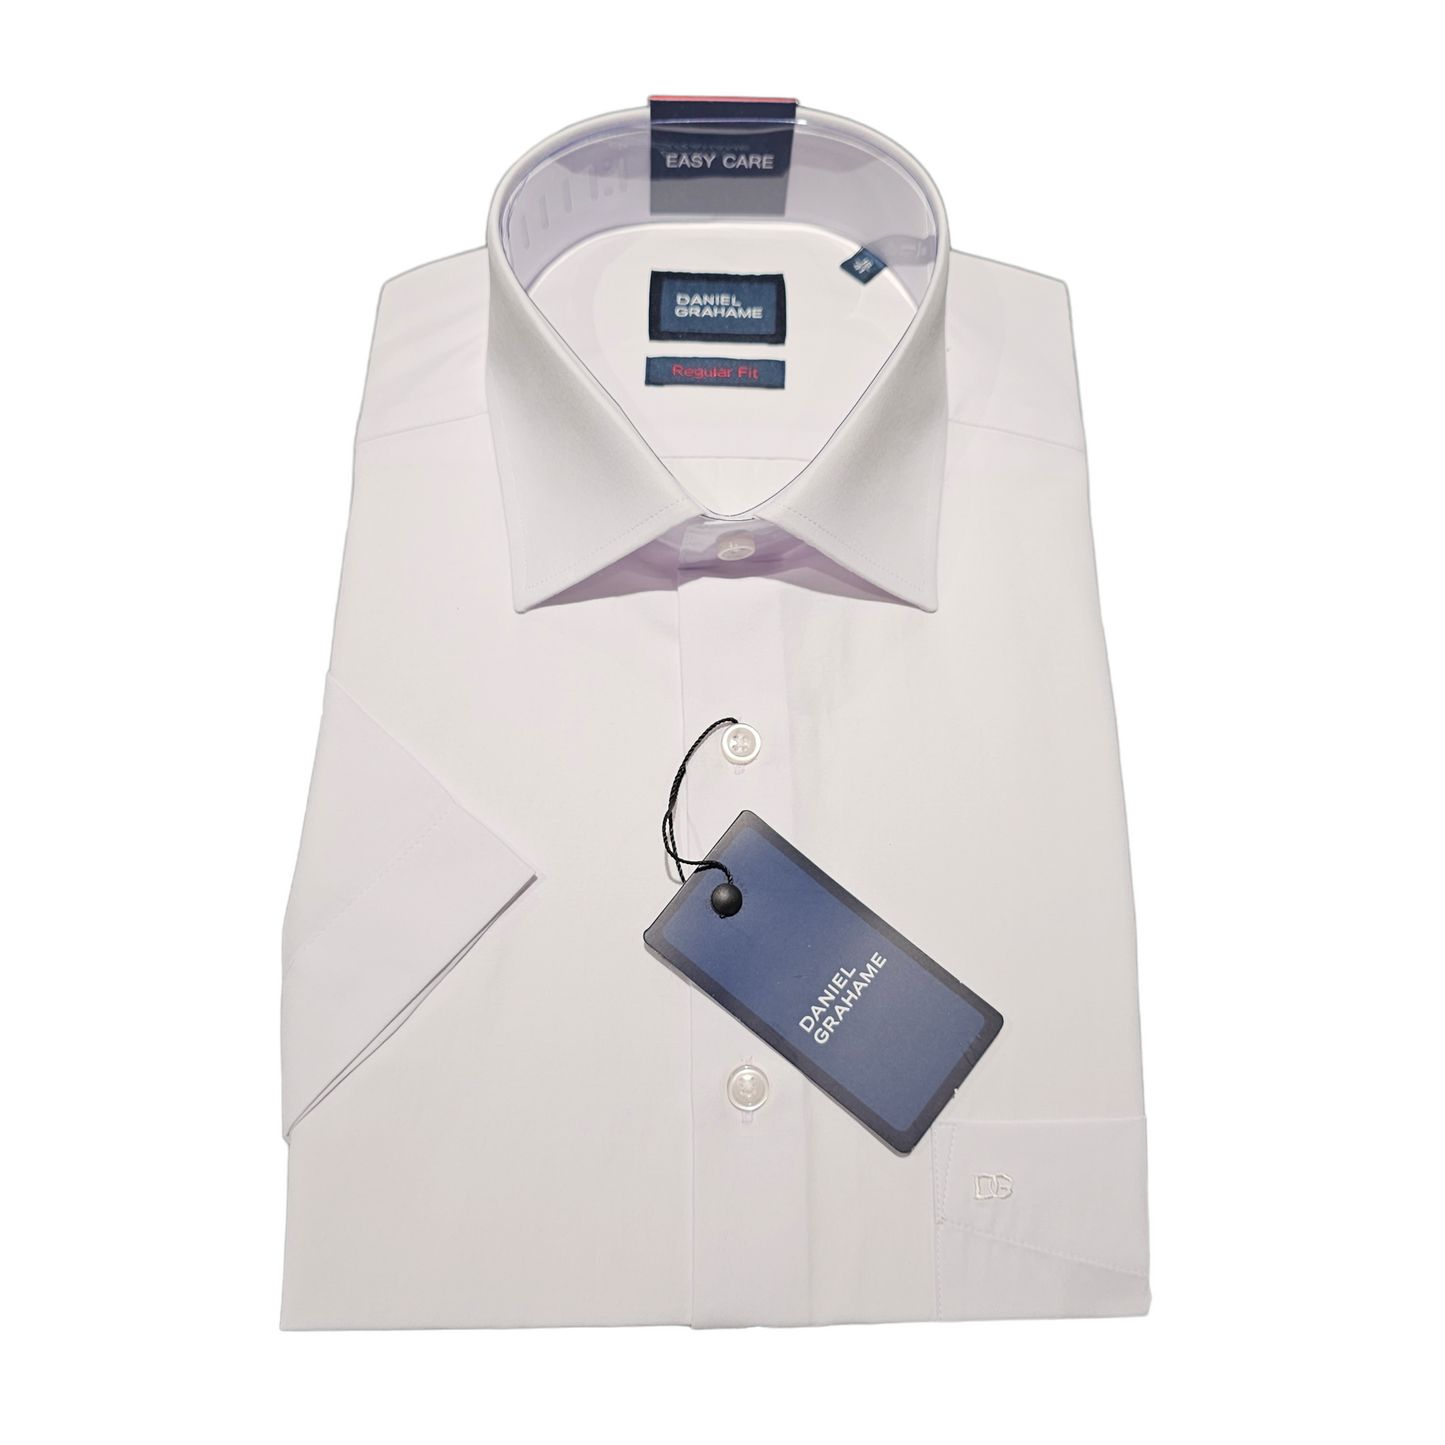 Daniel Grahame 15600SS 01 White Short Sleeve Dress Shirt